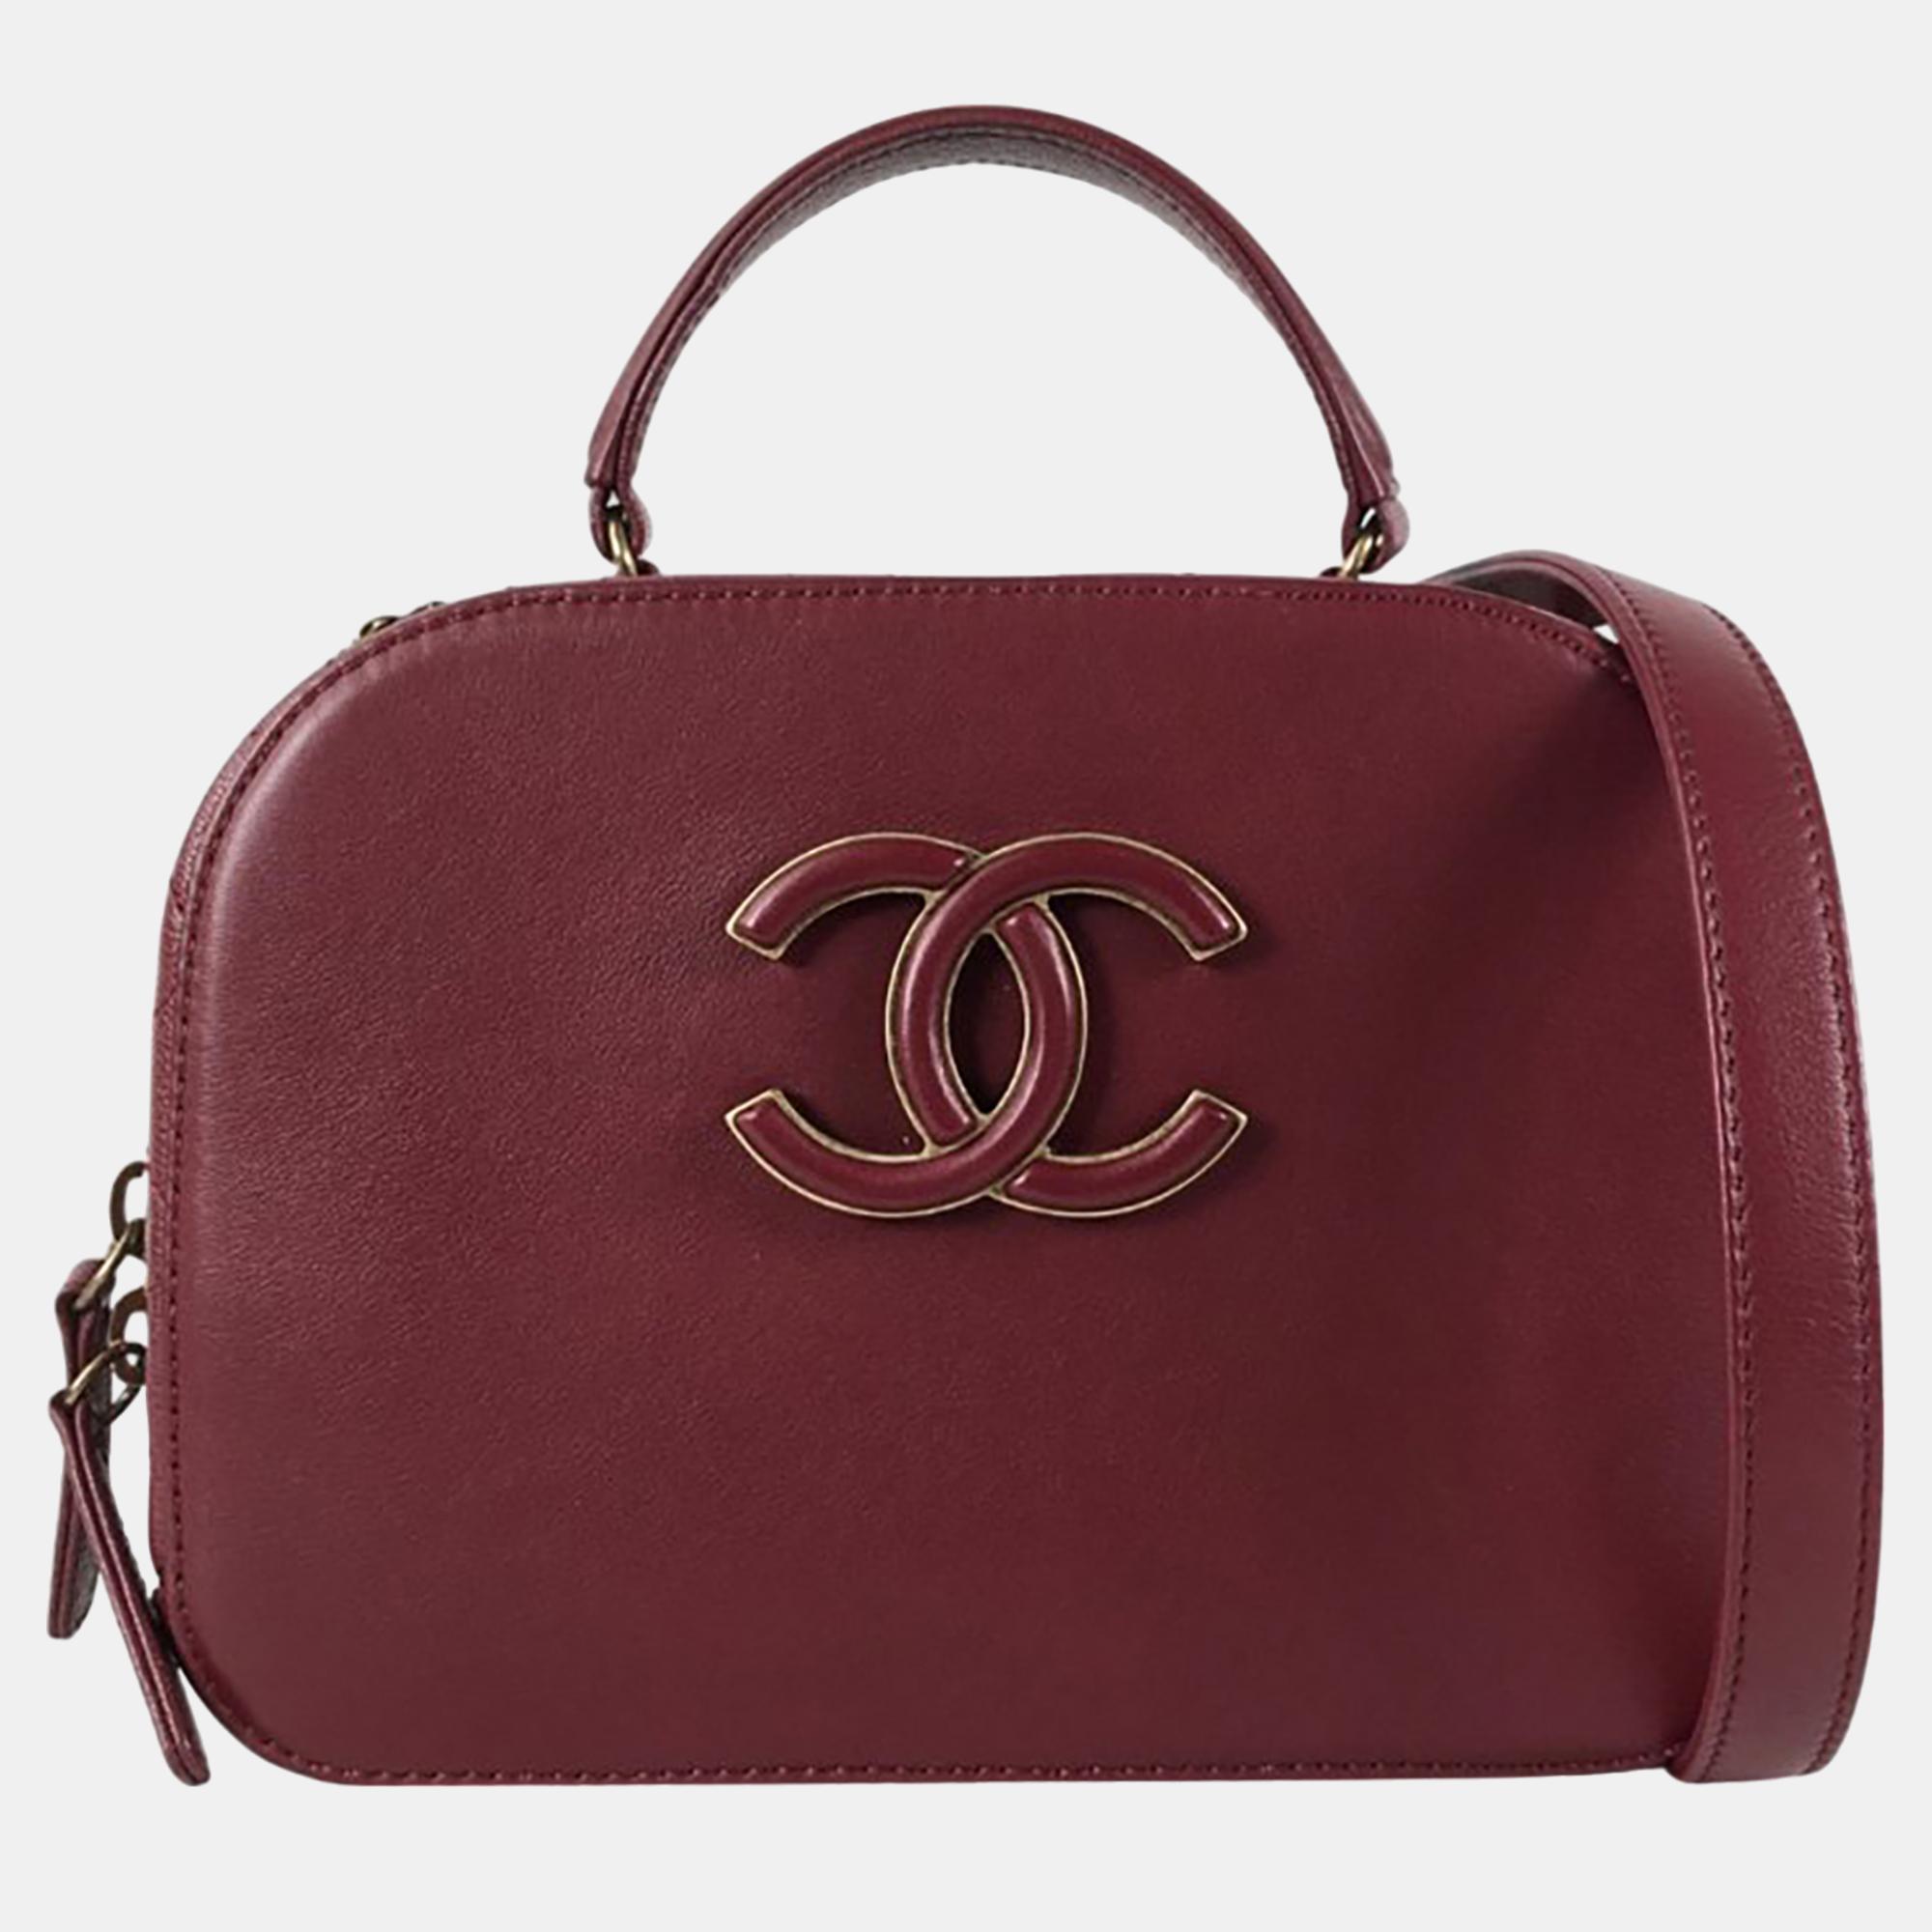 Chanel burgundy coco curve vanity case